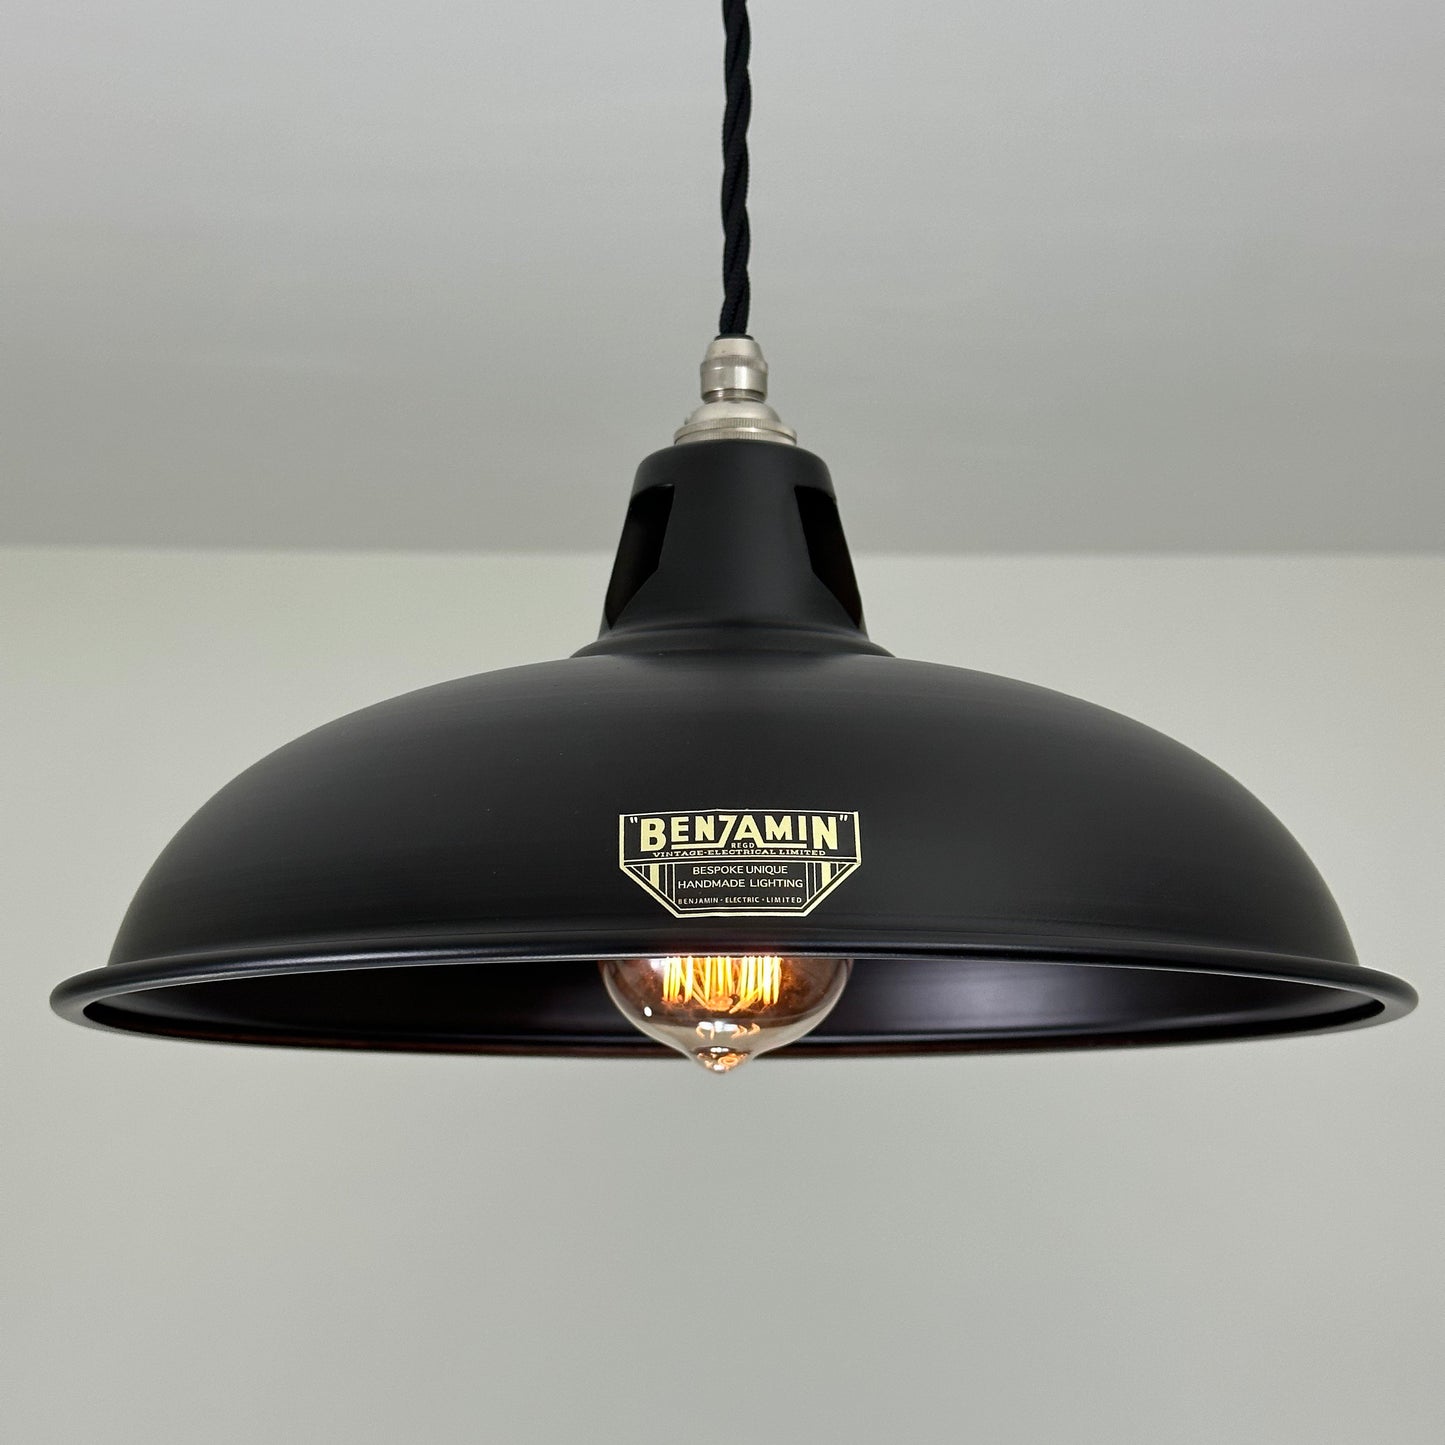 Sedgeford Coolie ~ Solid Steel Matt Black Industrial Shade Pendant Set Light | Ceiling Dining Room | Kitchen Table | Vintage